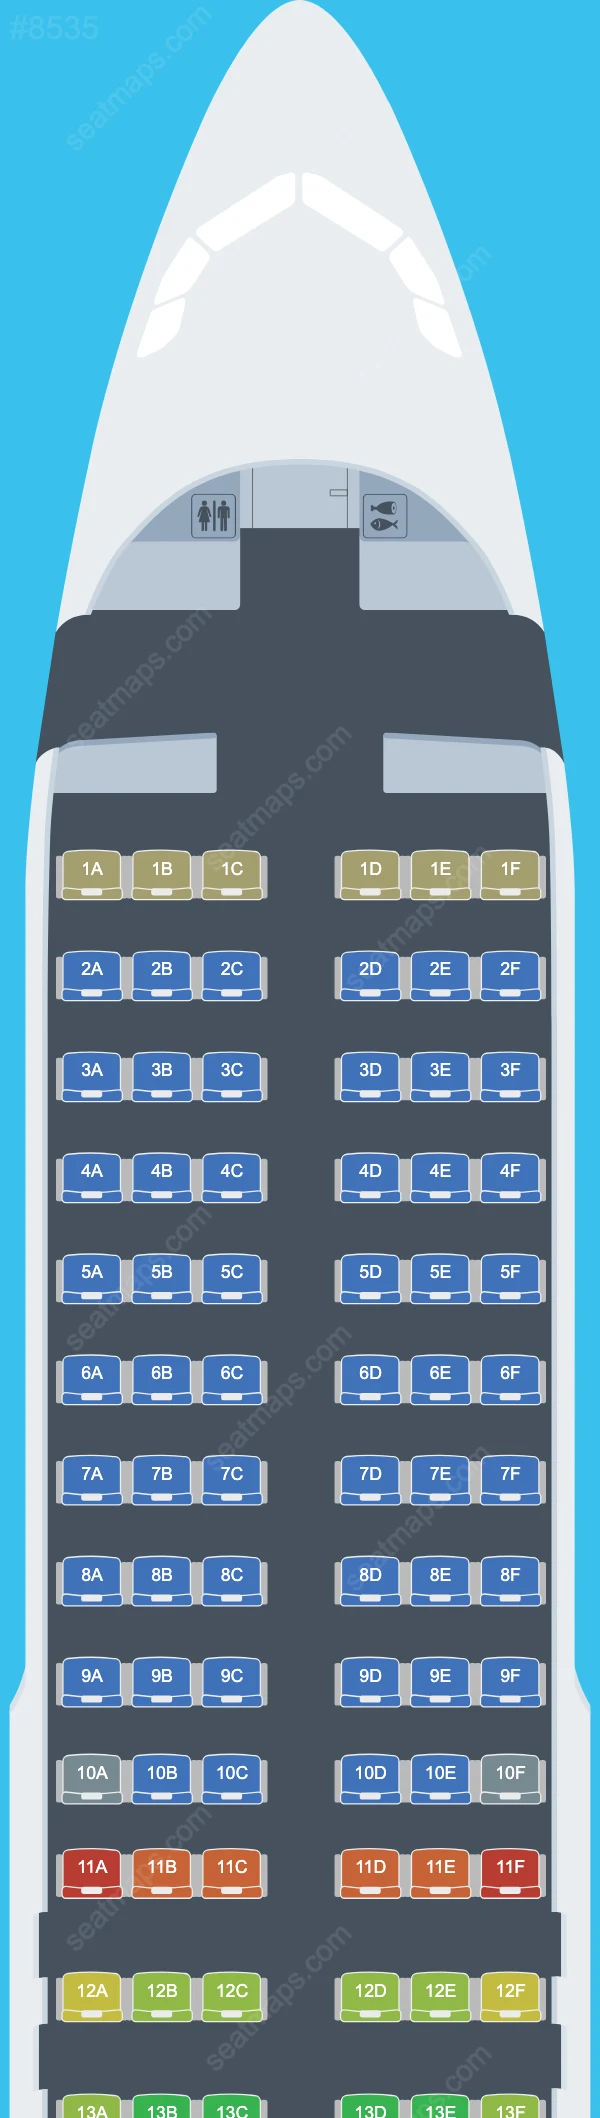 LATAM Airlines Peru Airbus A320 Seat Maps A320-200neo